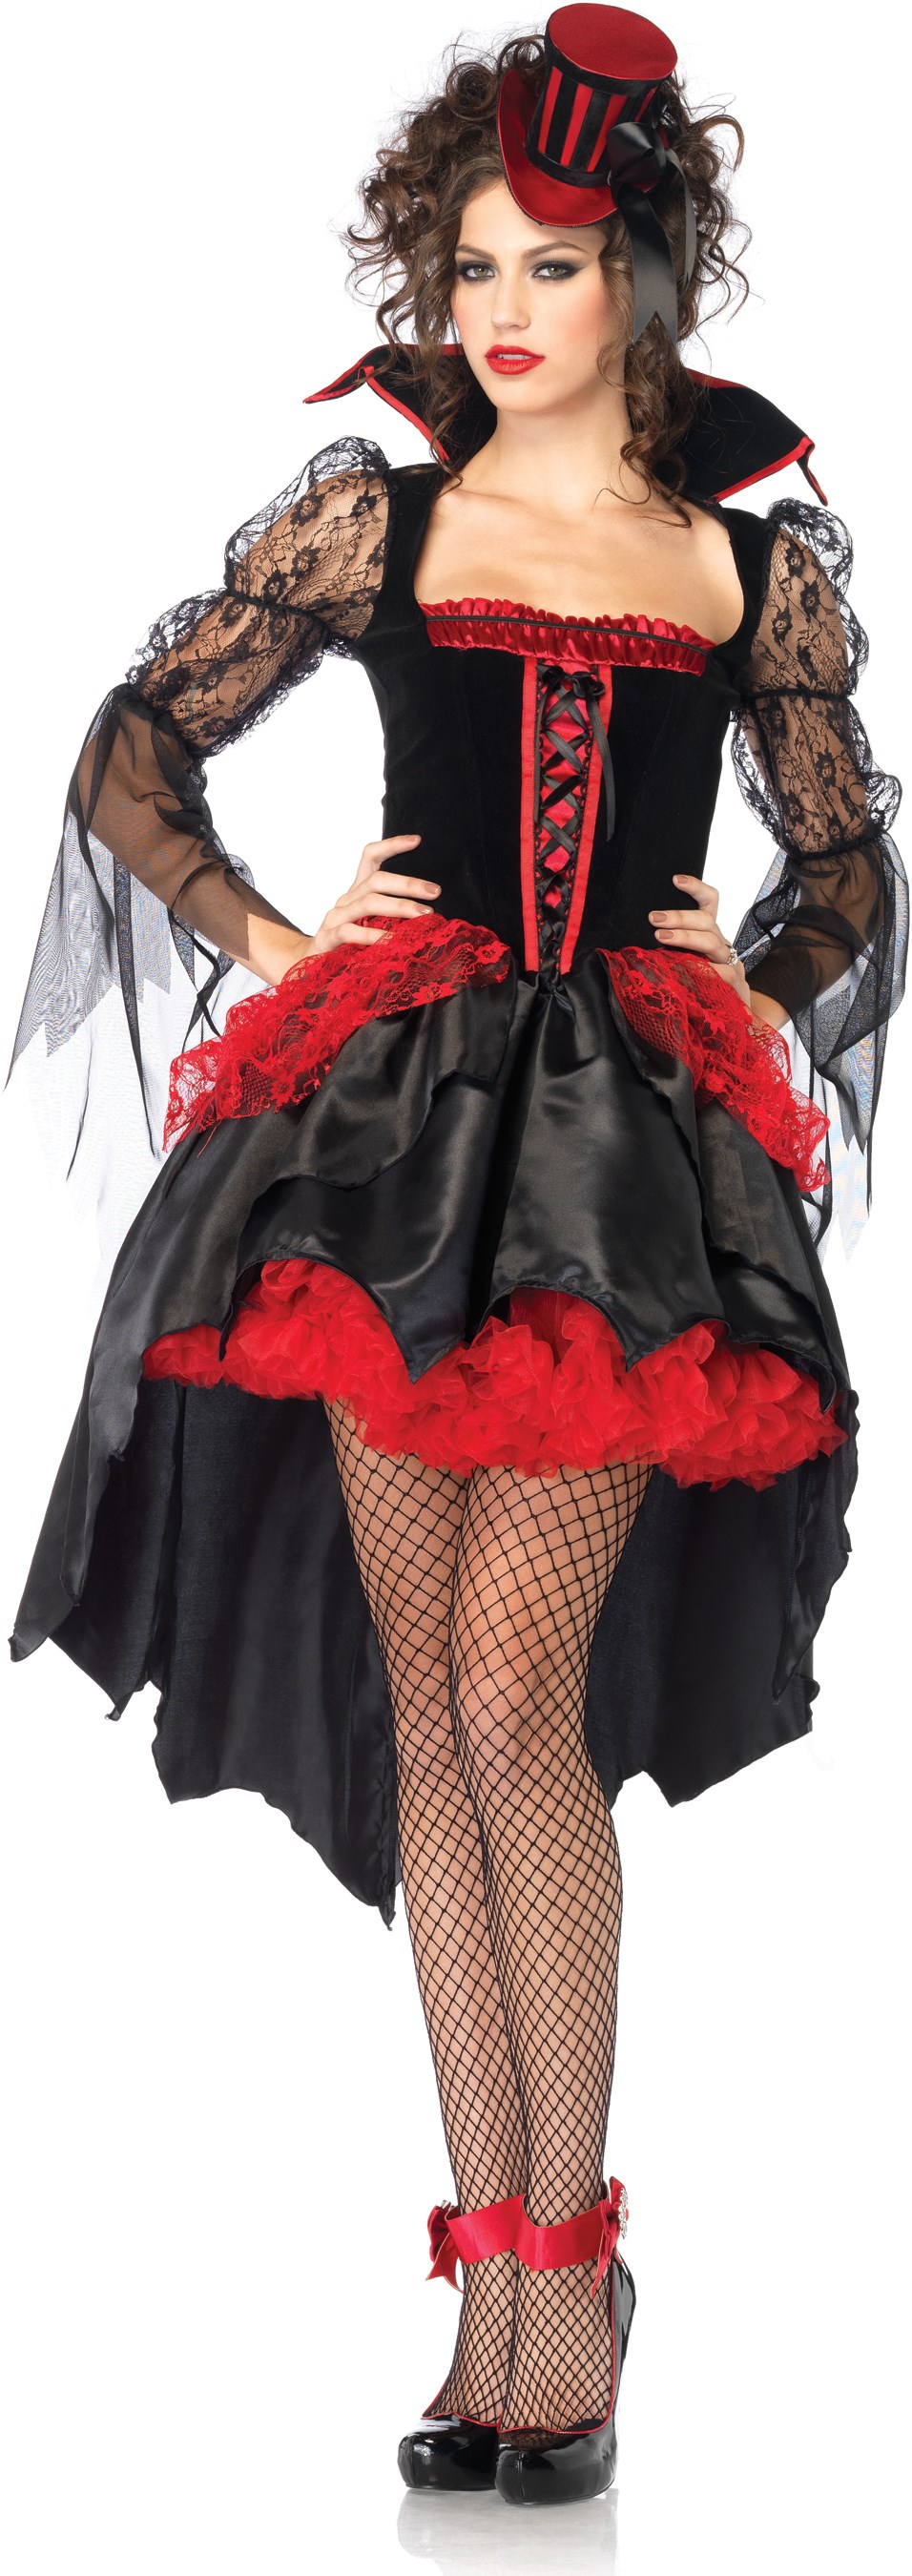 Midnight Mistress Adult Costume | BuyCostumes.com